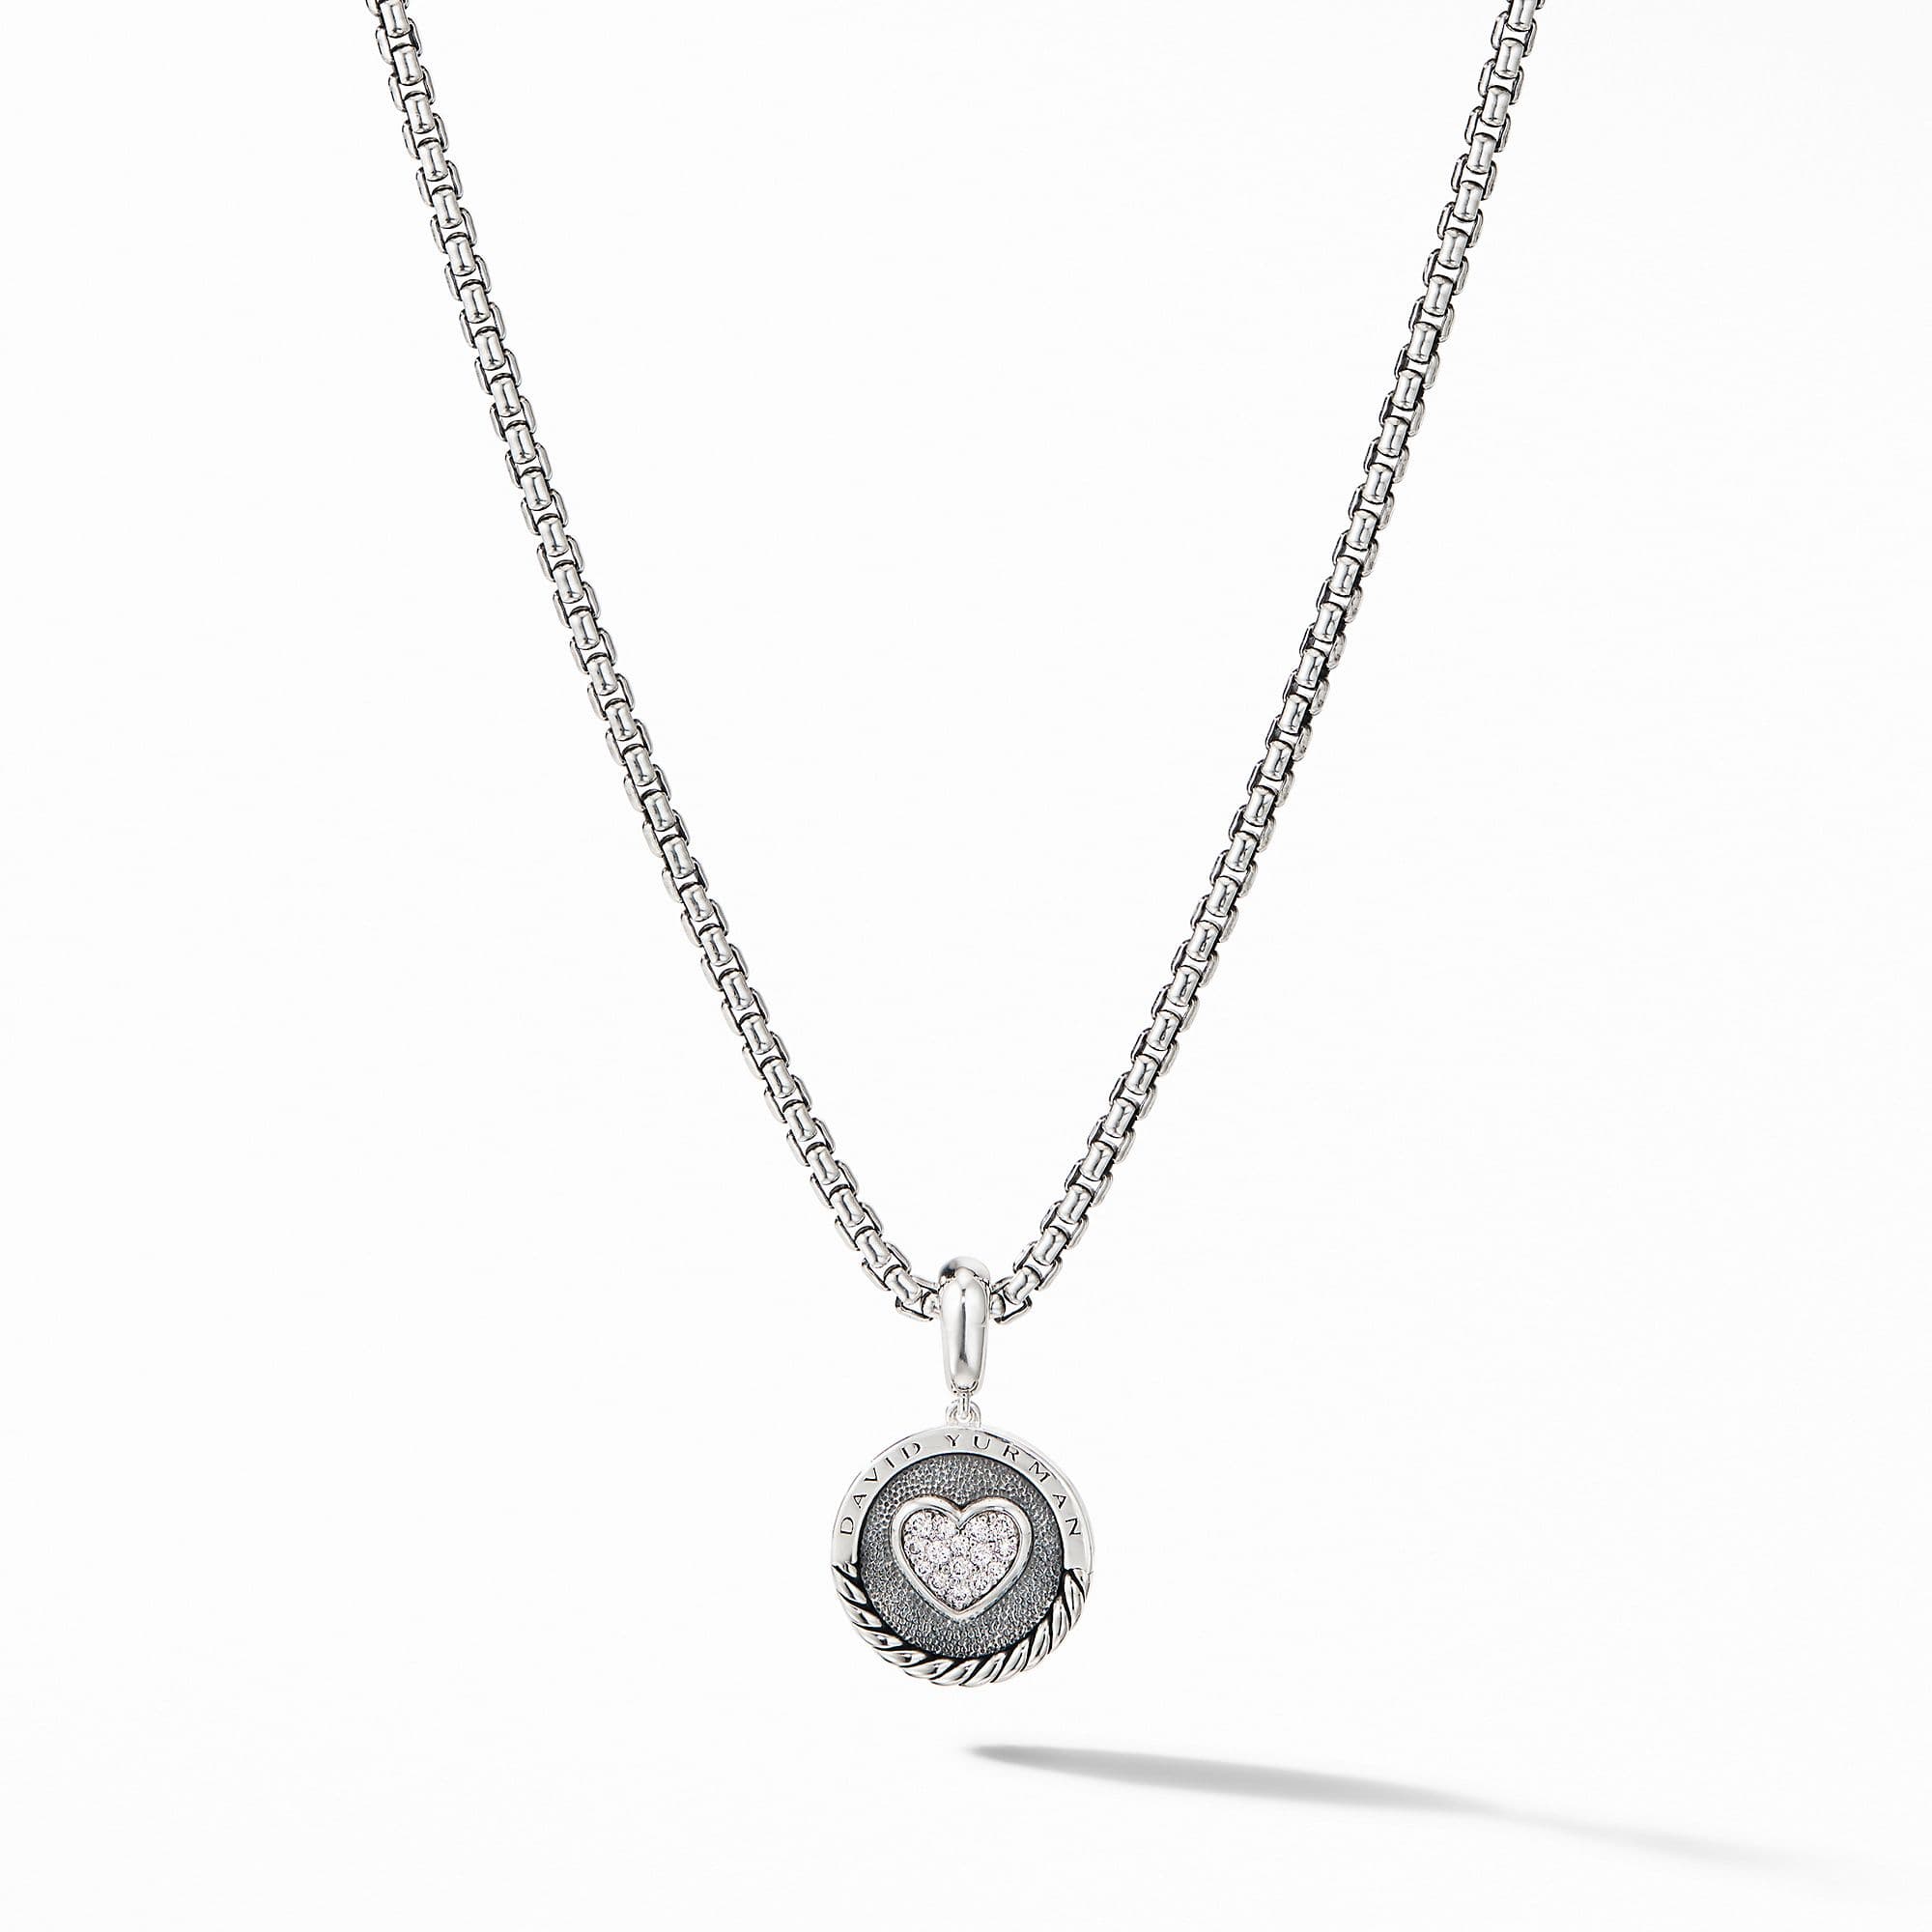 David Yurman Heart Charm Pendant in Sterling Silver with Diamonds